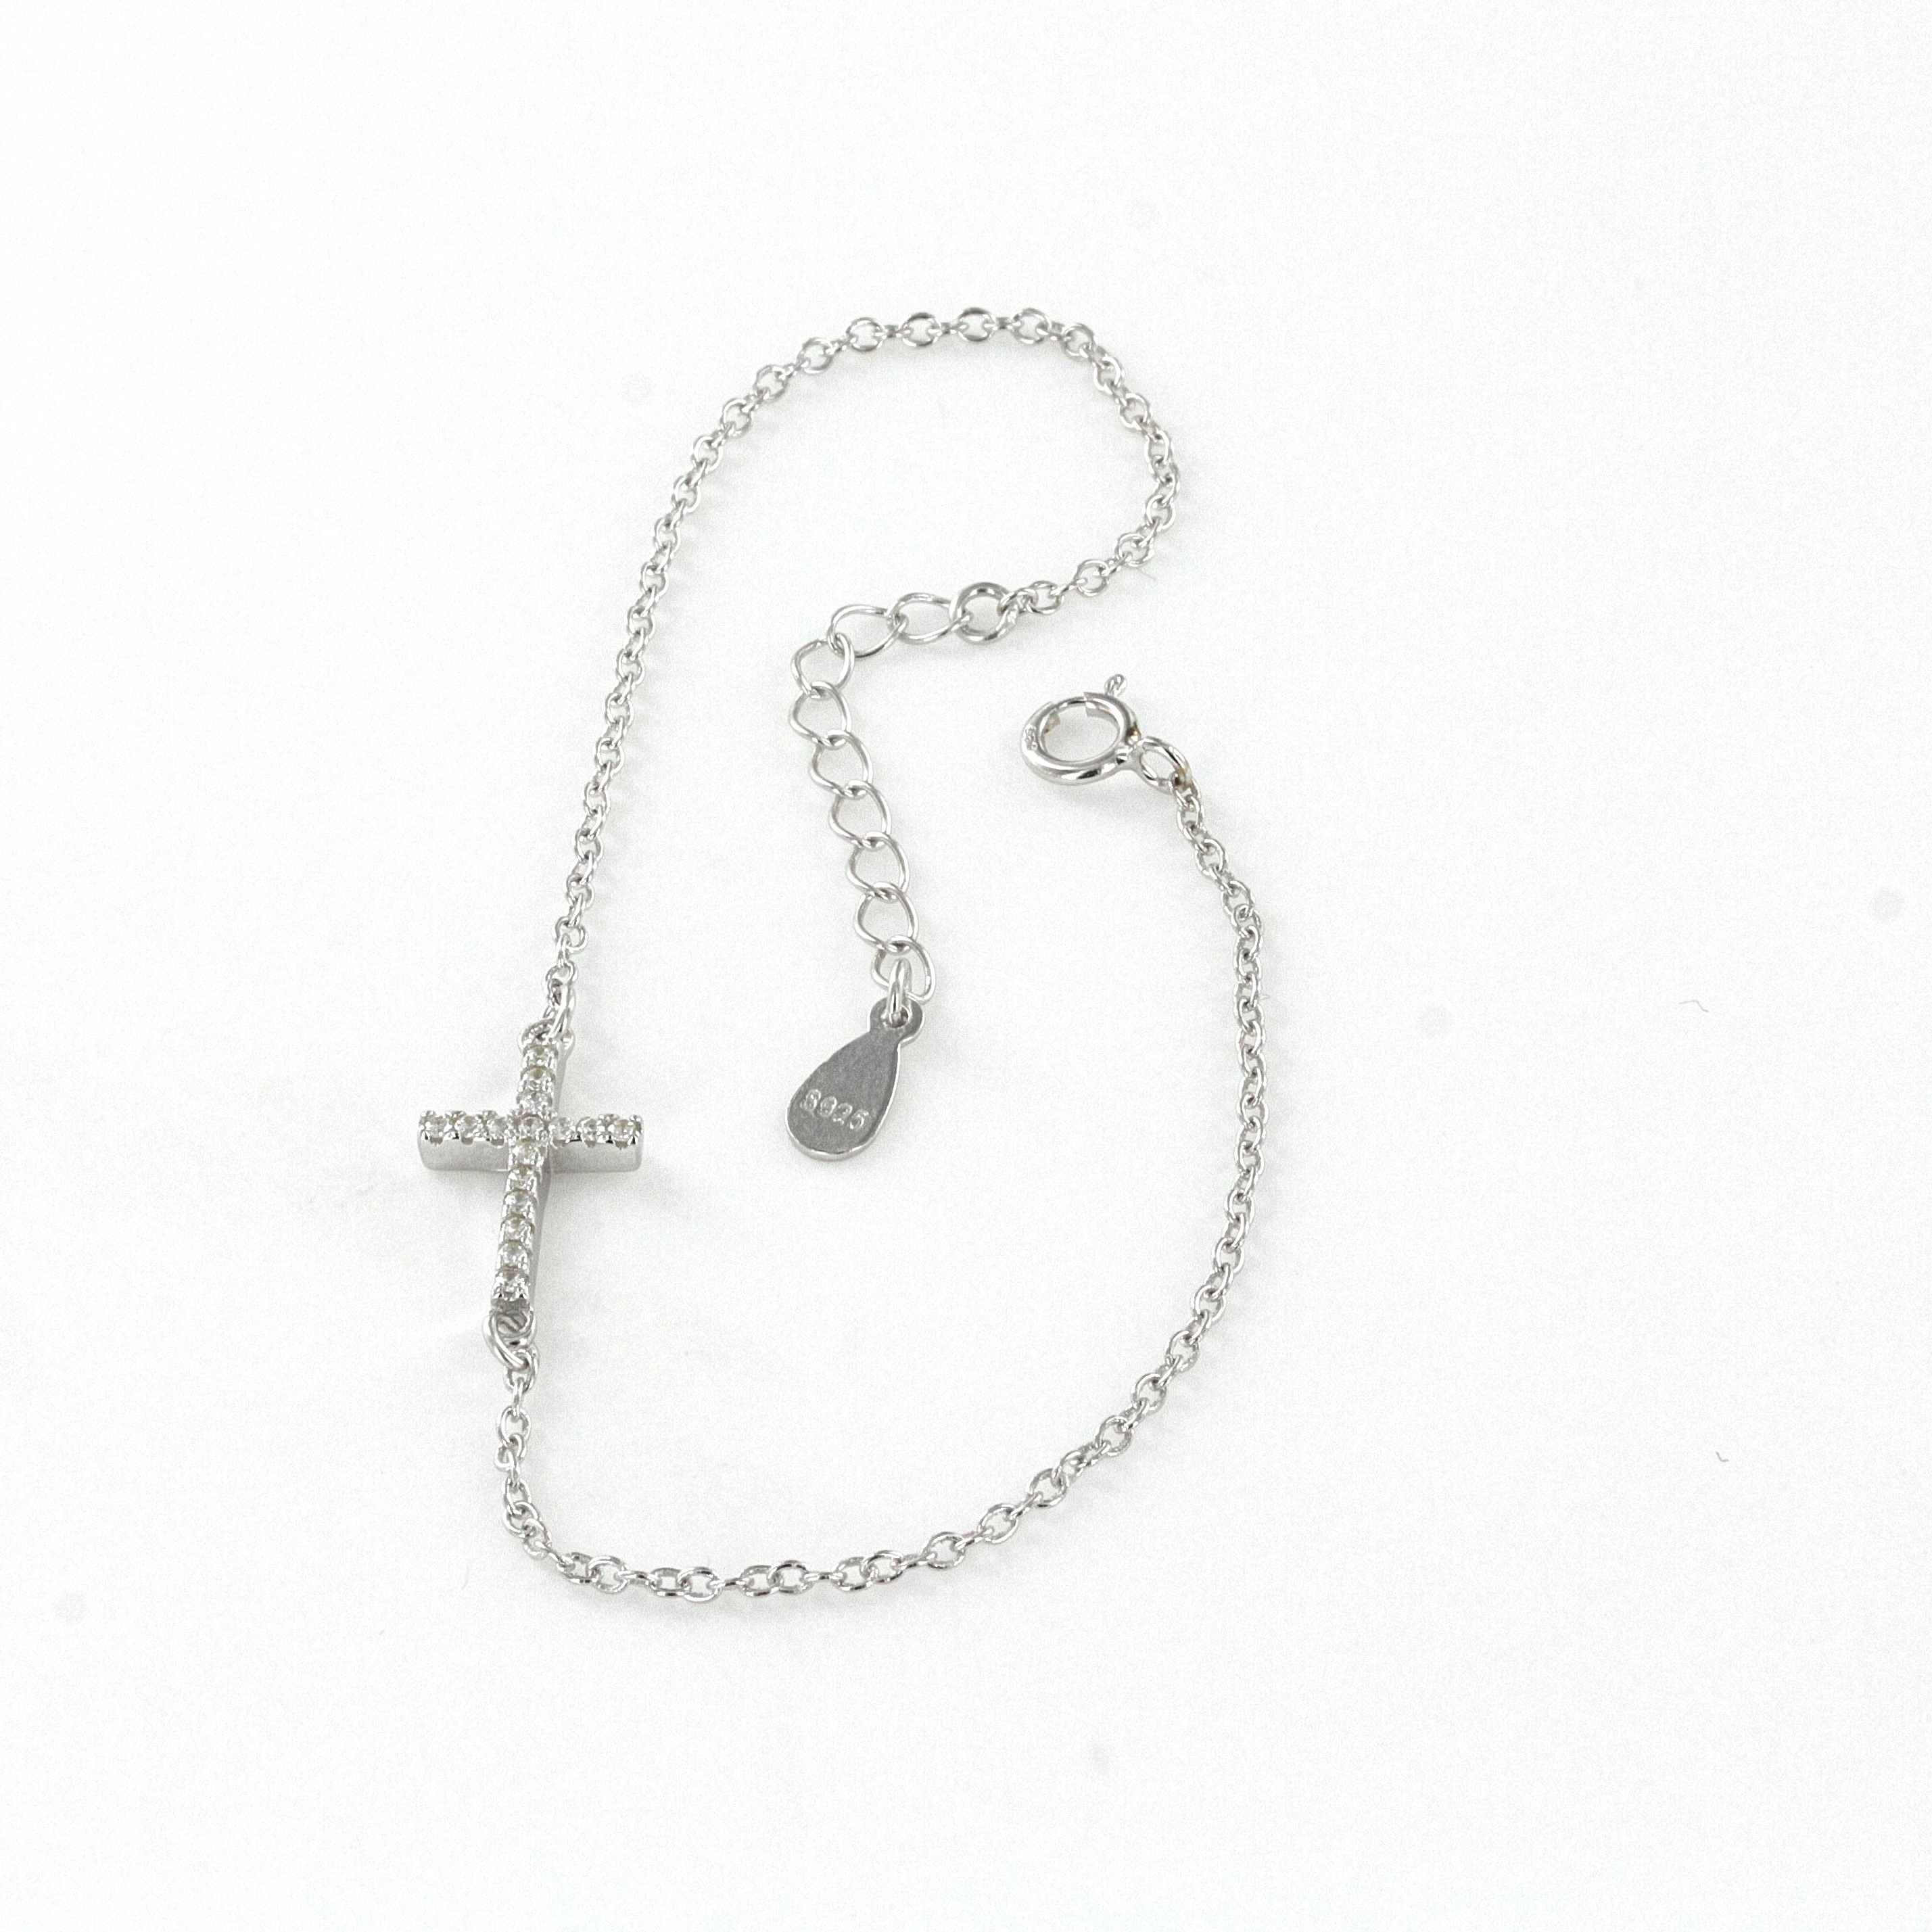 Cross Bracelet with Cubic Zirconias in Sterling Silver